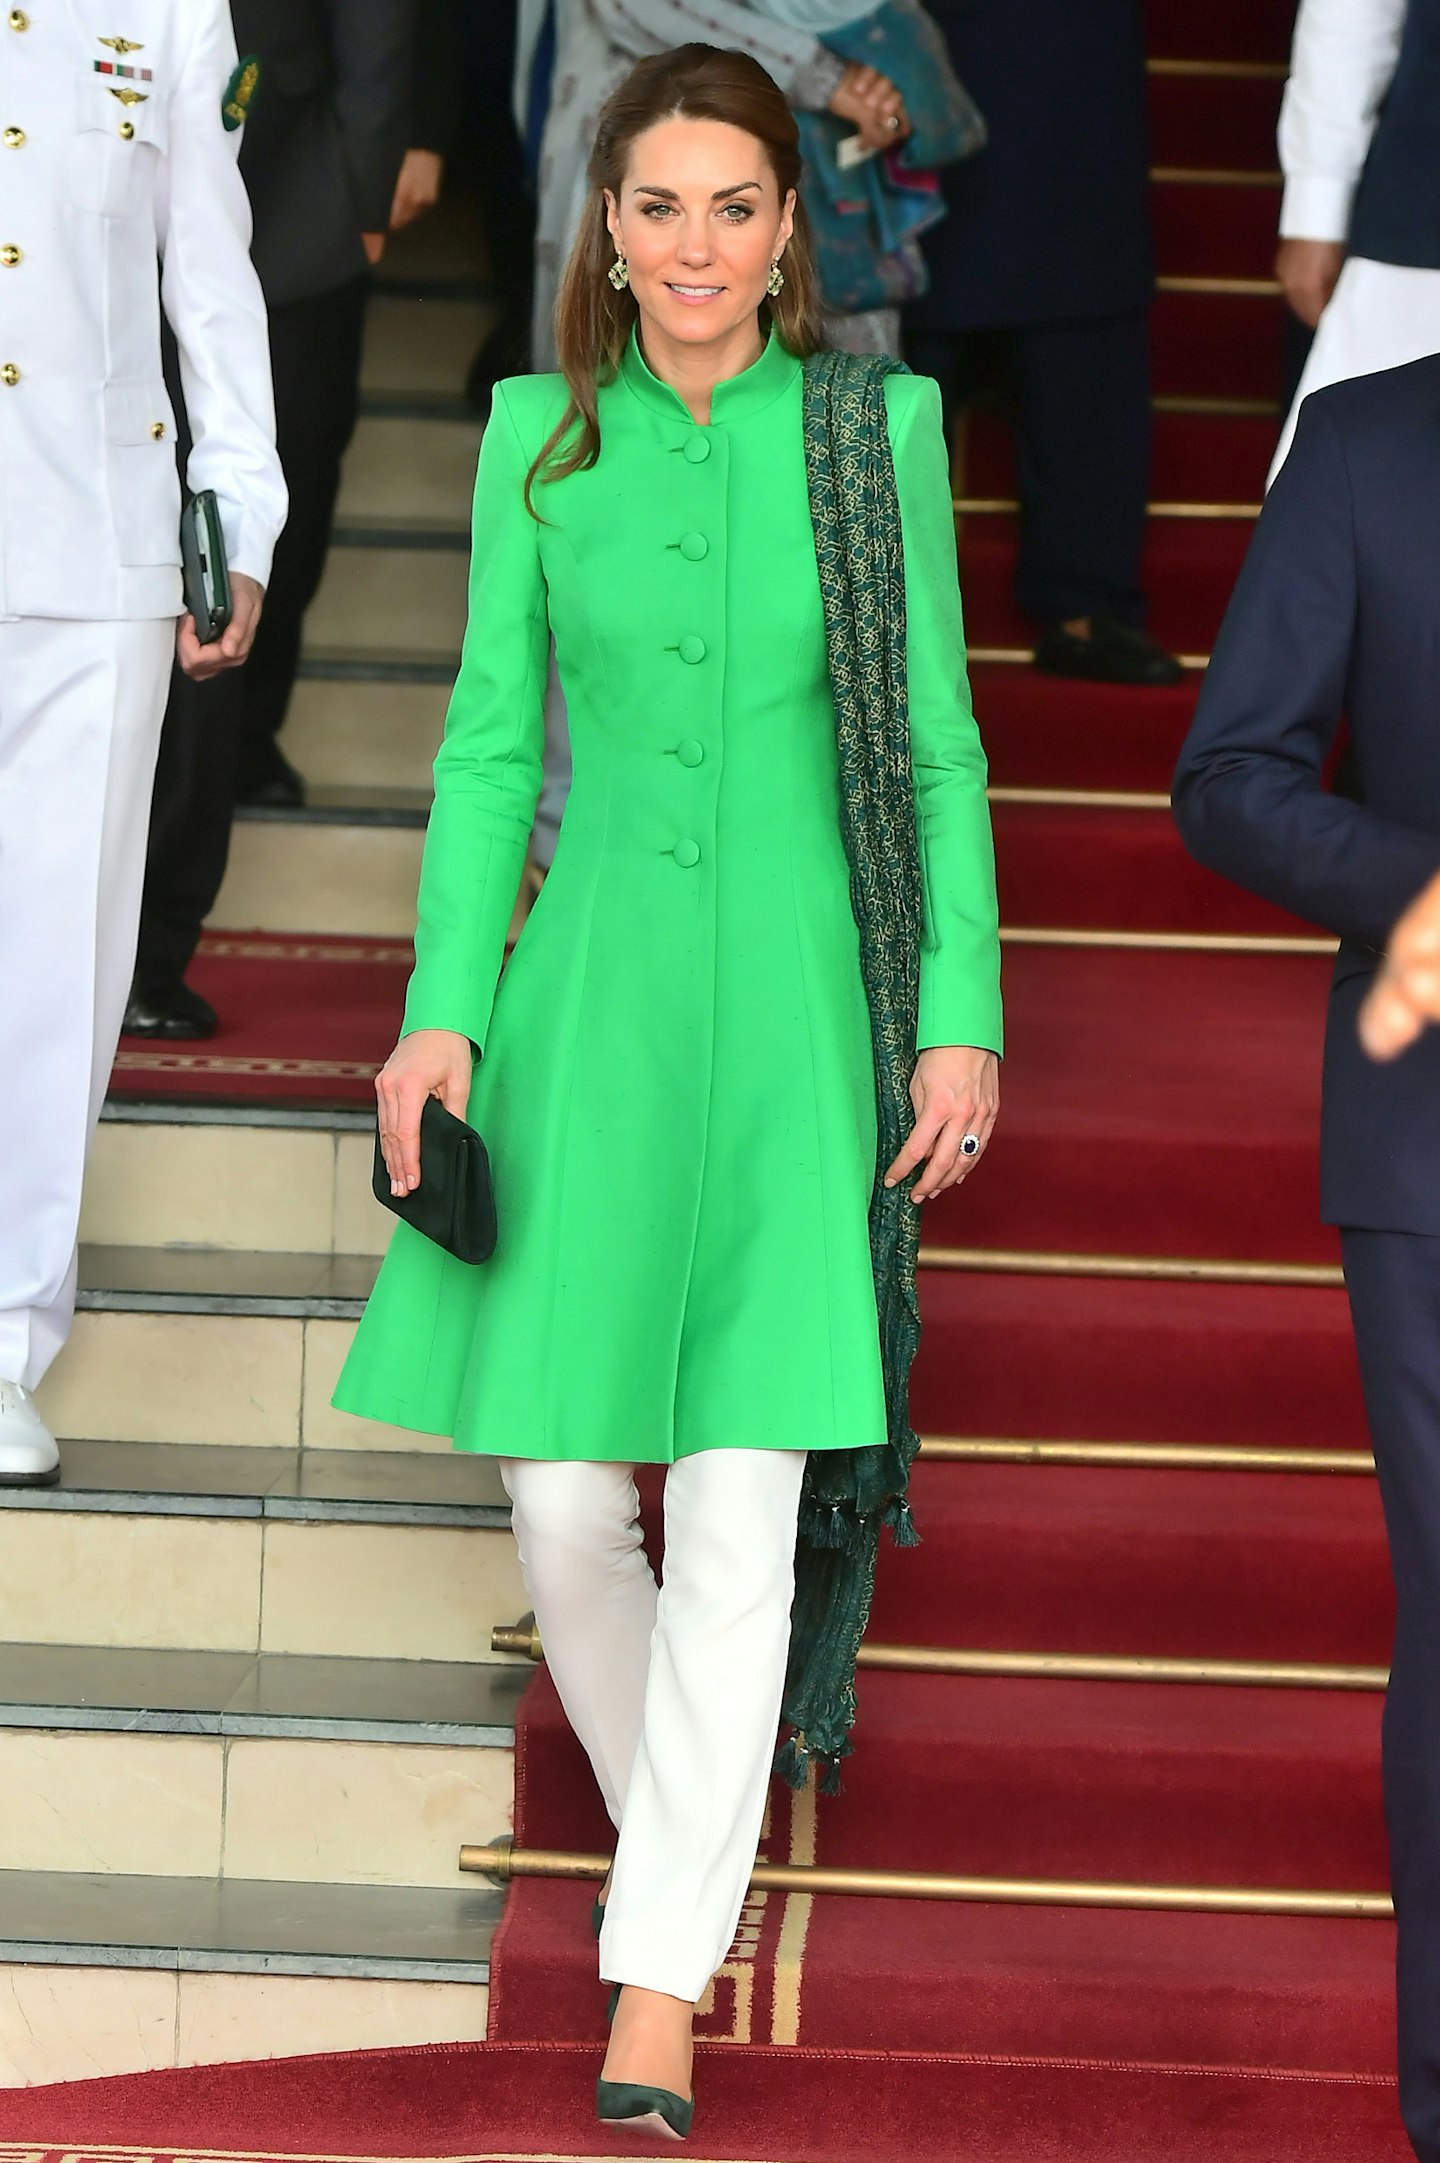 kate middleton green outfit pakistan